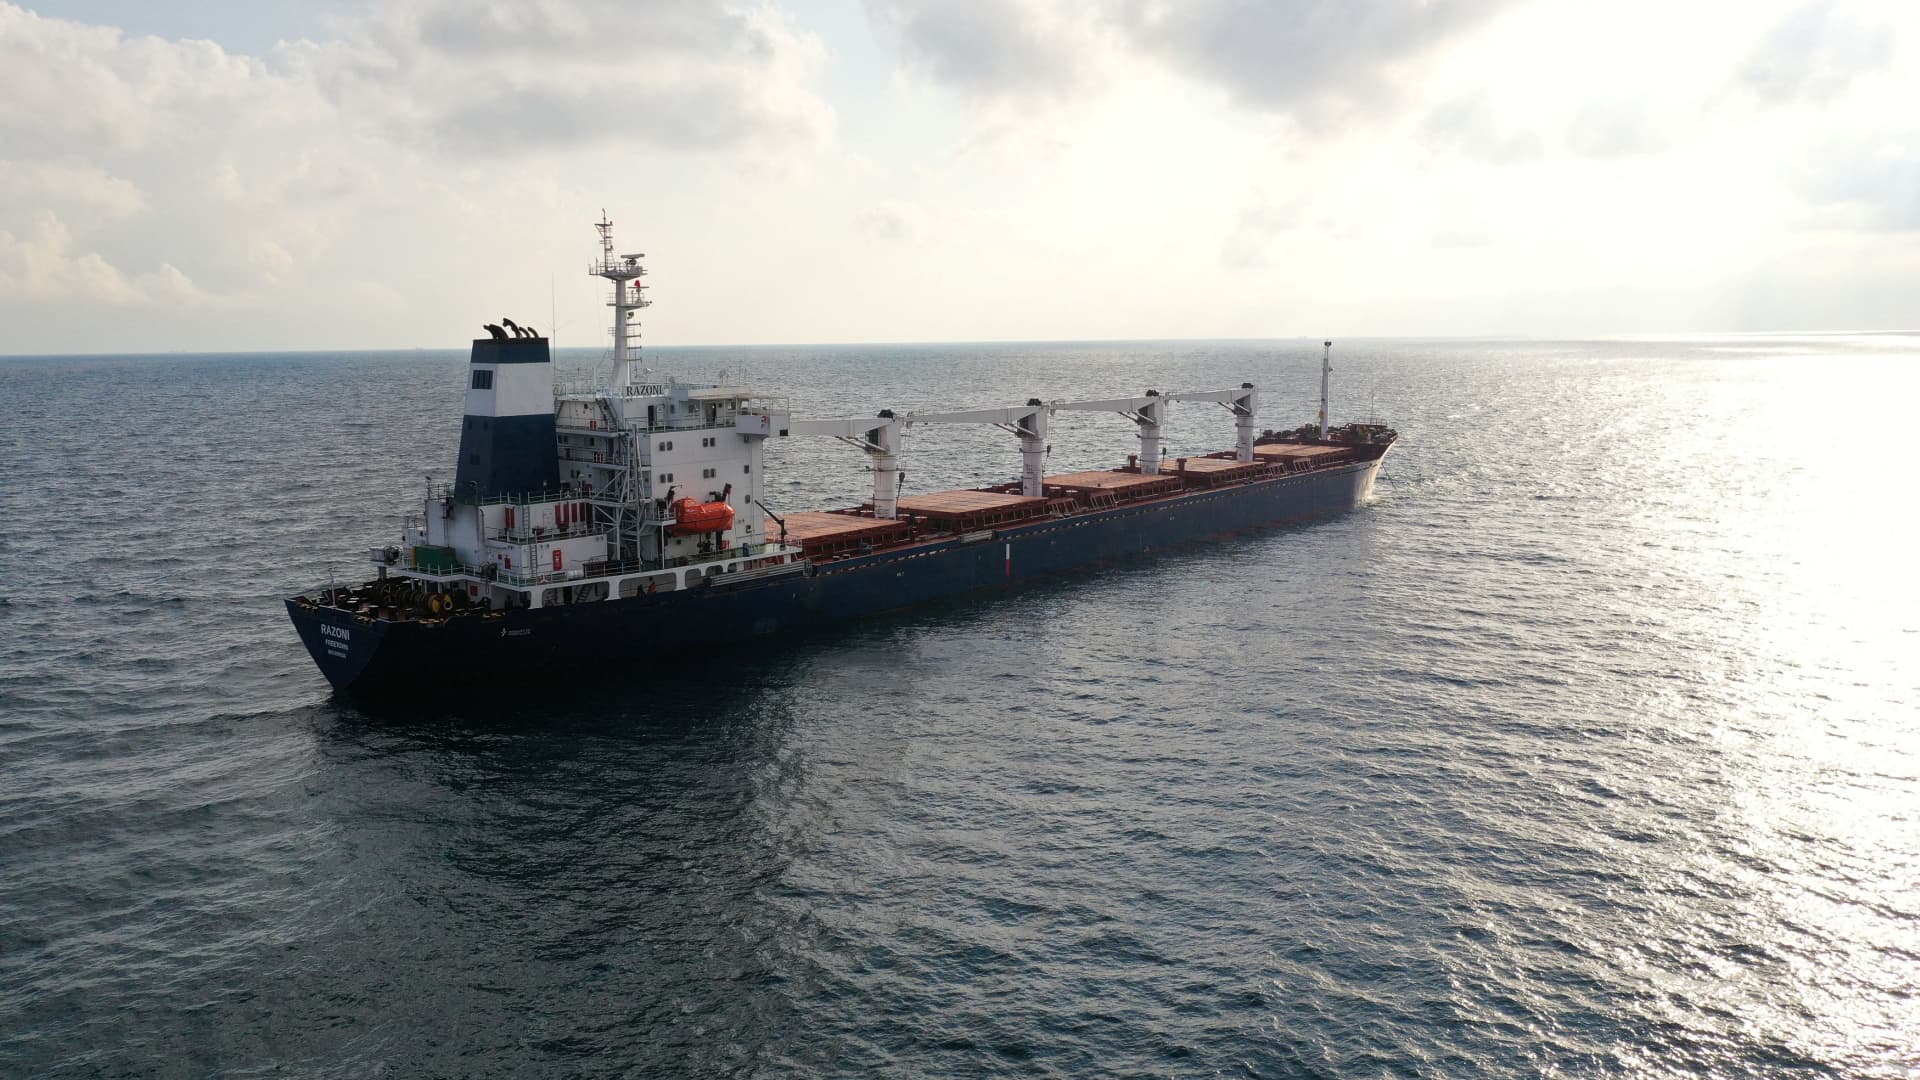 The Sierra Leone-flagged cargo ship Razoni, carrying Ukrainian grain, is seen in the Black Sea off Kilyos, near Istanbul, Turkey August 3, 2022.